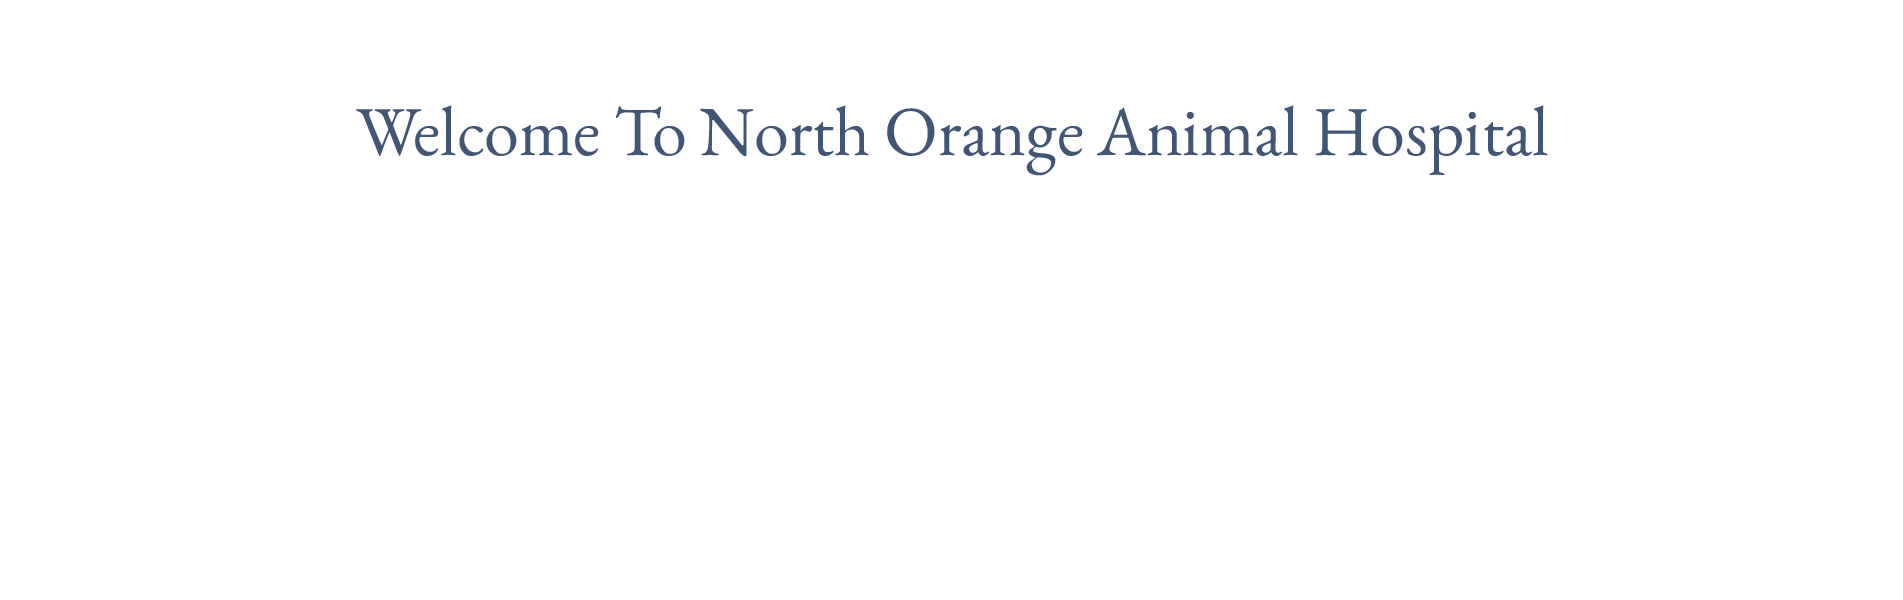 Welcome To North Orange Animal Hospital